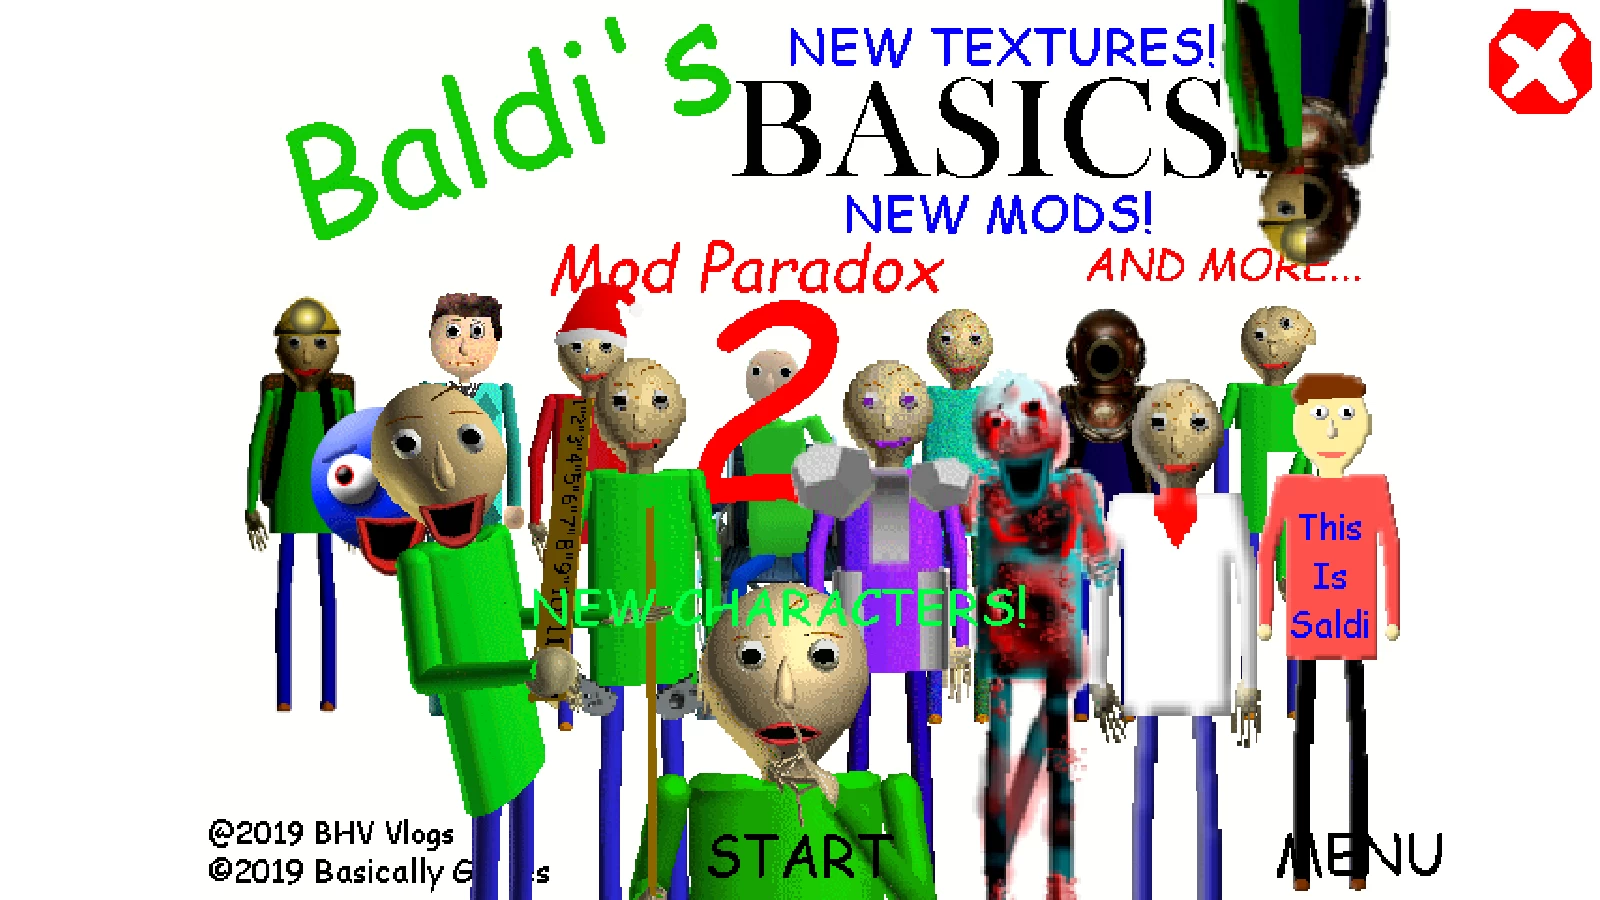 Baldi in a little bit of everything. Baldi Basics Mods. Baldi's Basics Mod Paradox. Baldi Basics in a little bit of everything. Bbialboe.